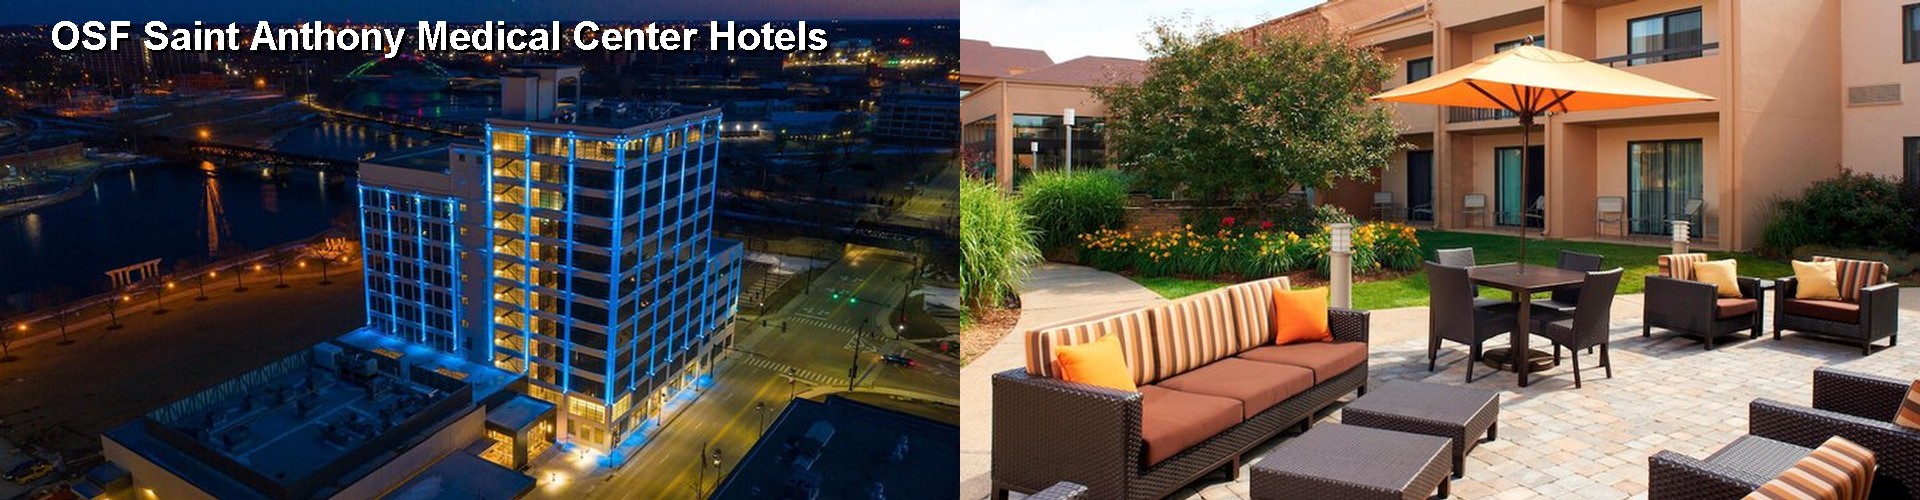 5 Best Hotels near OSF Saint Anthony Medical Center